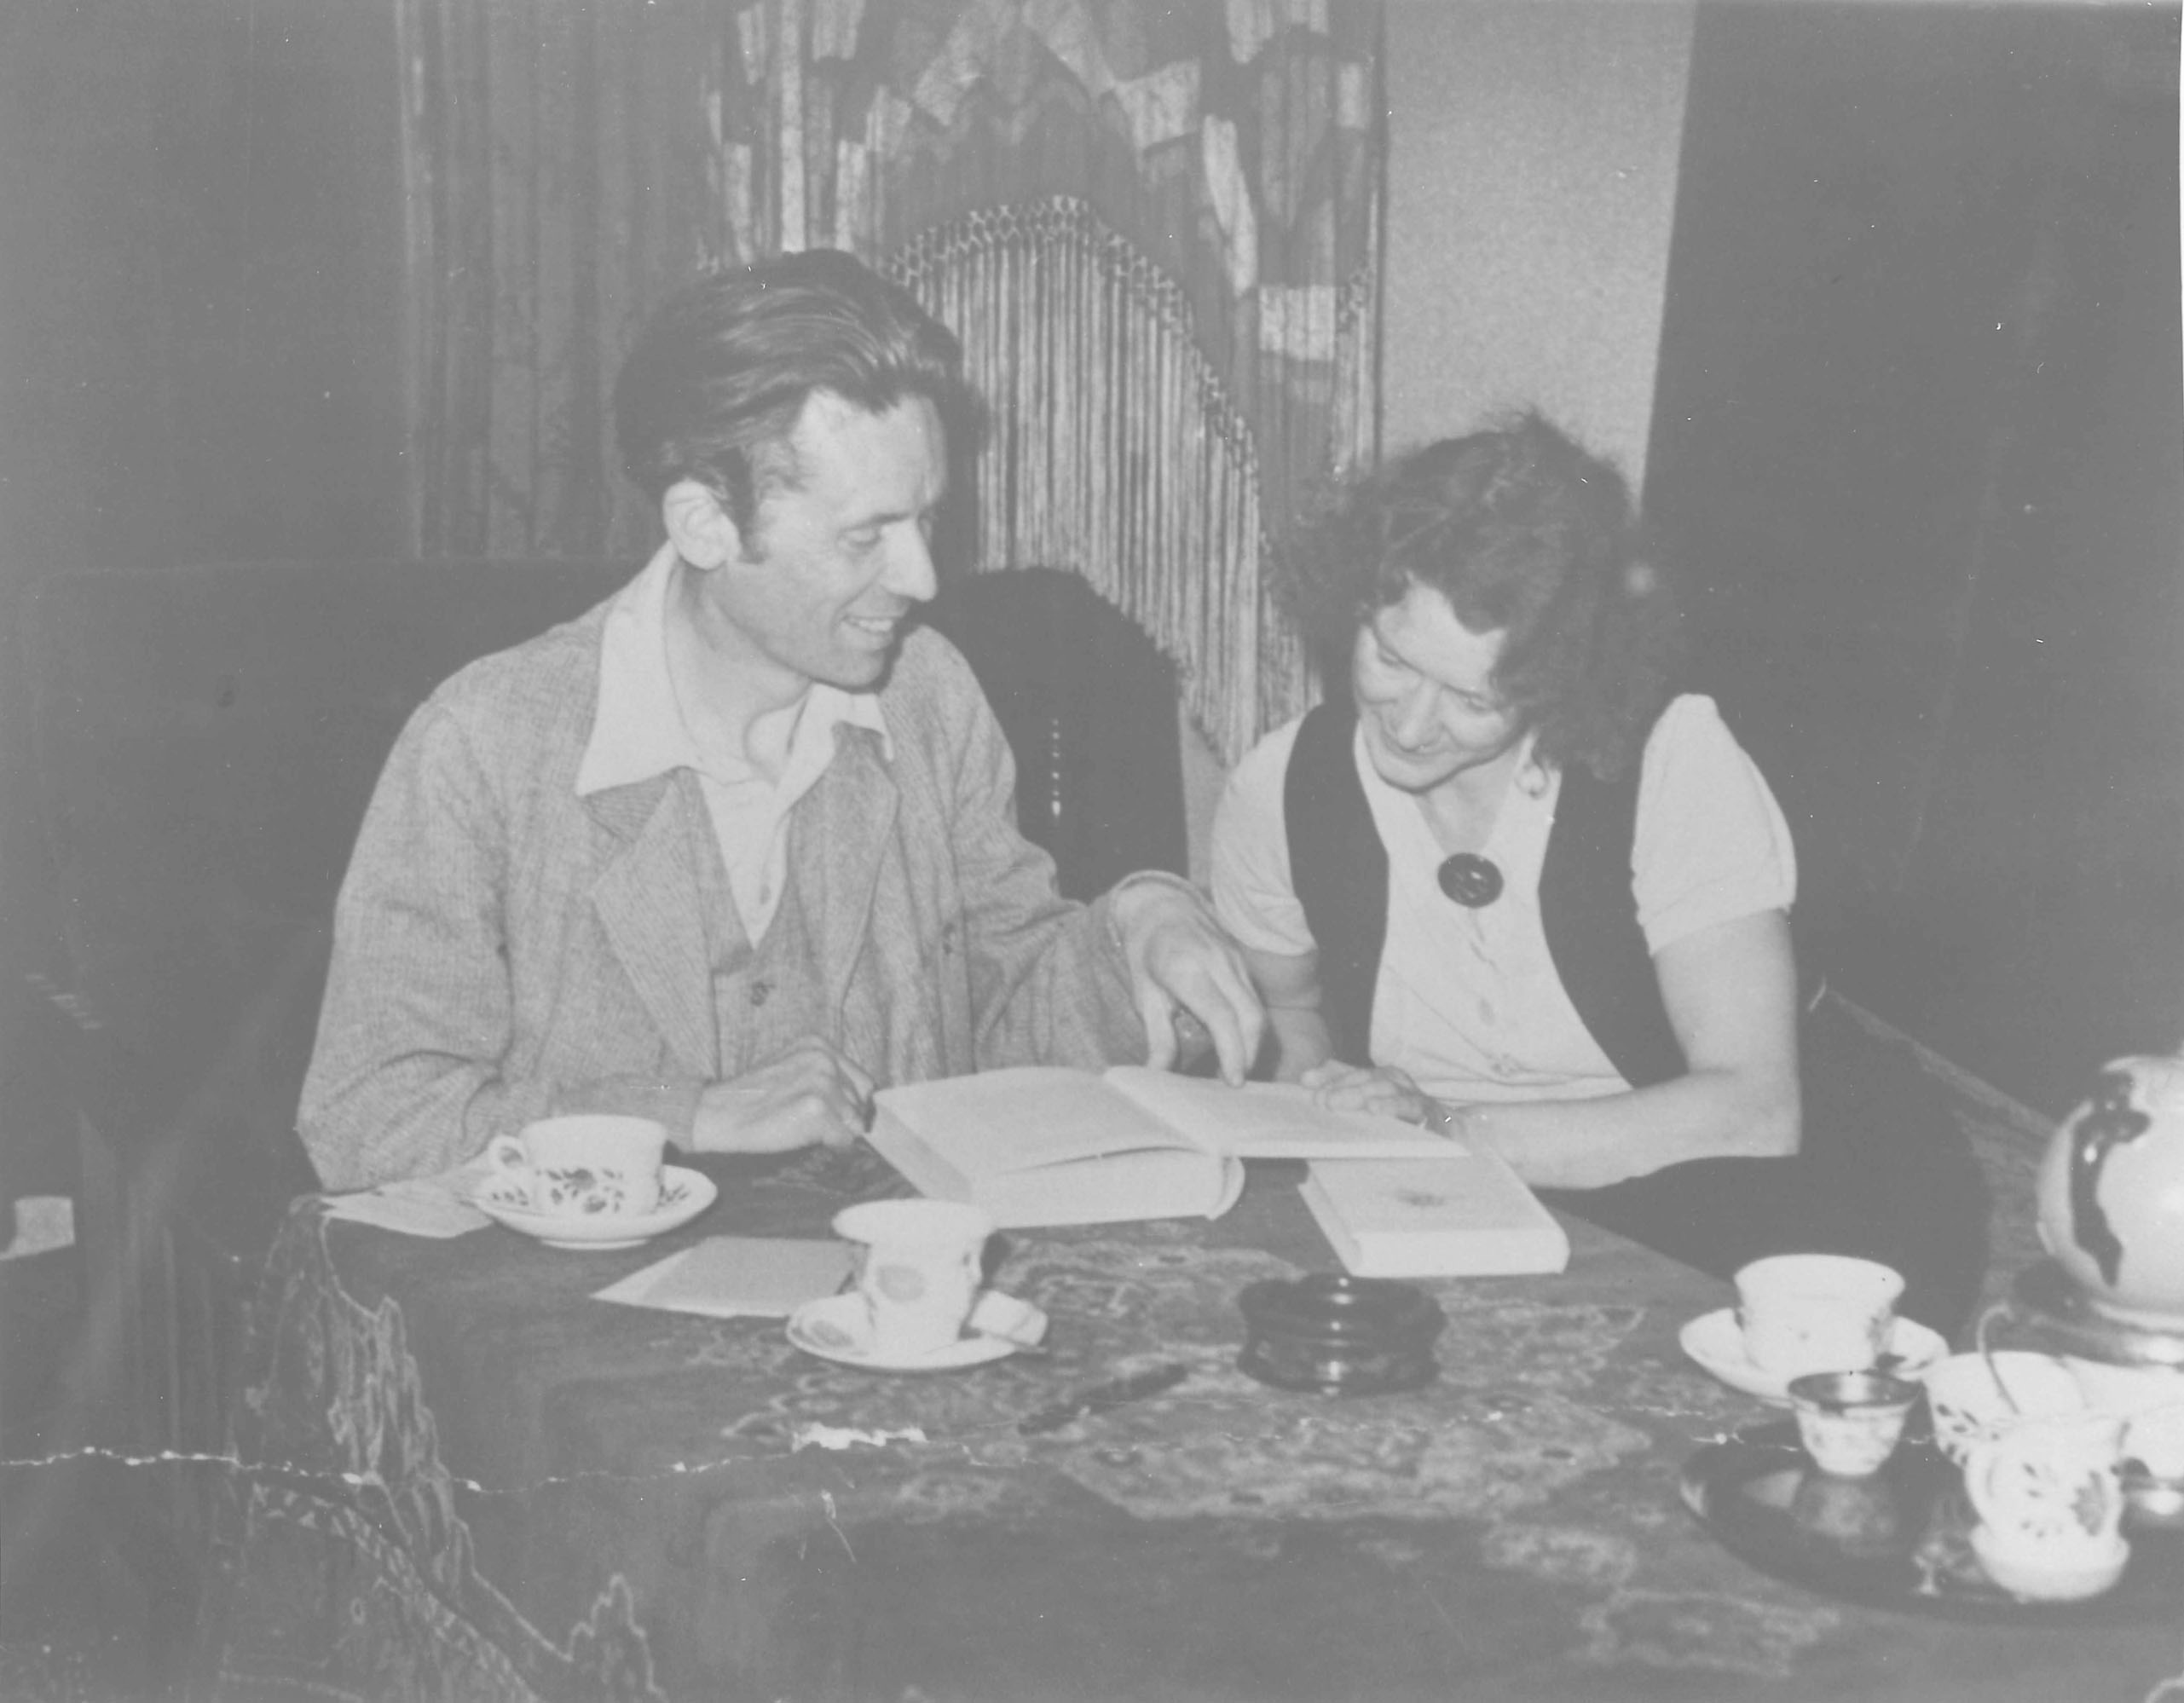 19. Hendrik de Vries and Riek van der Zee in their home in Haren, called ’t Woeste hoekje by them (1946)